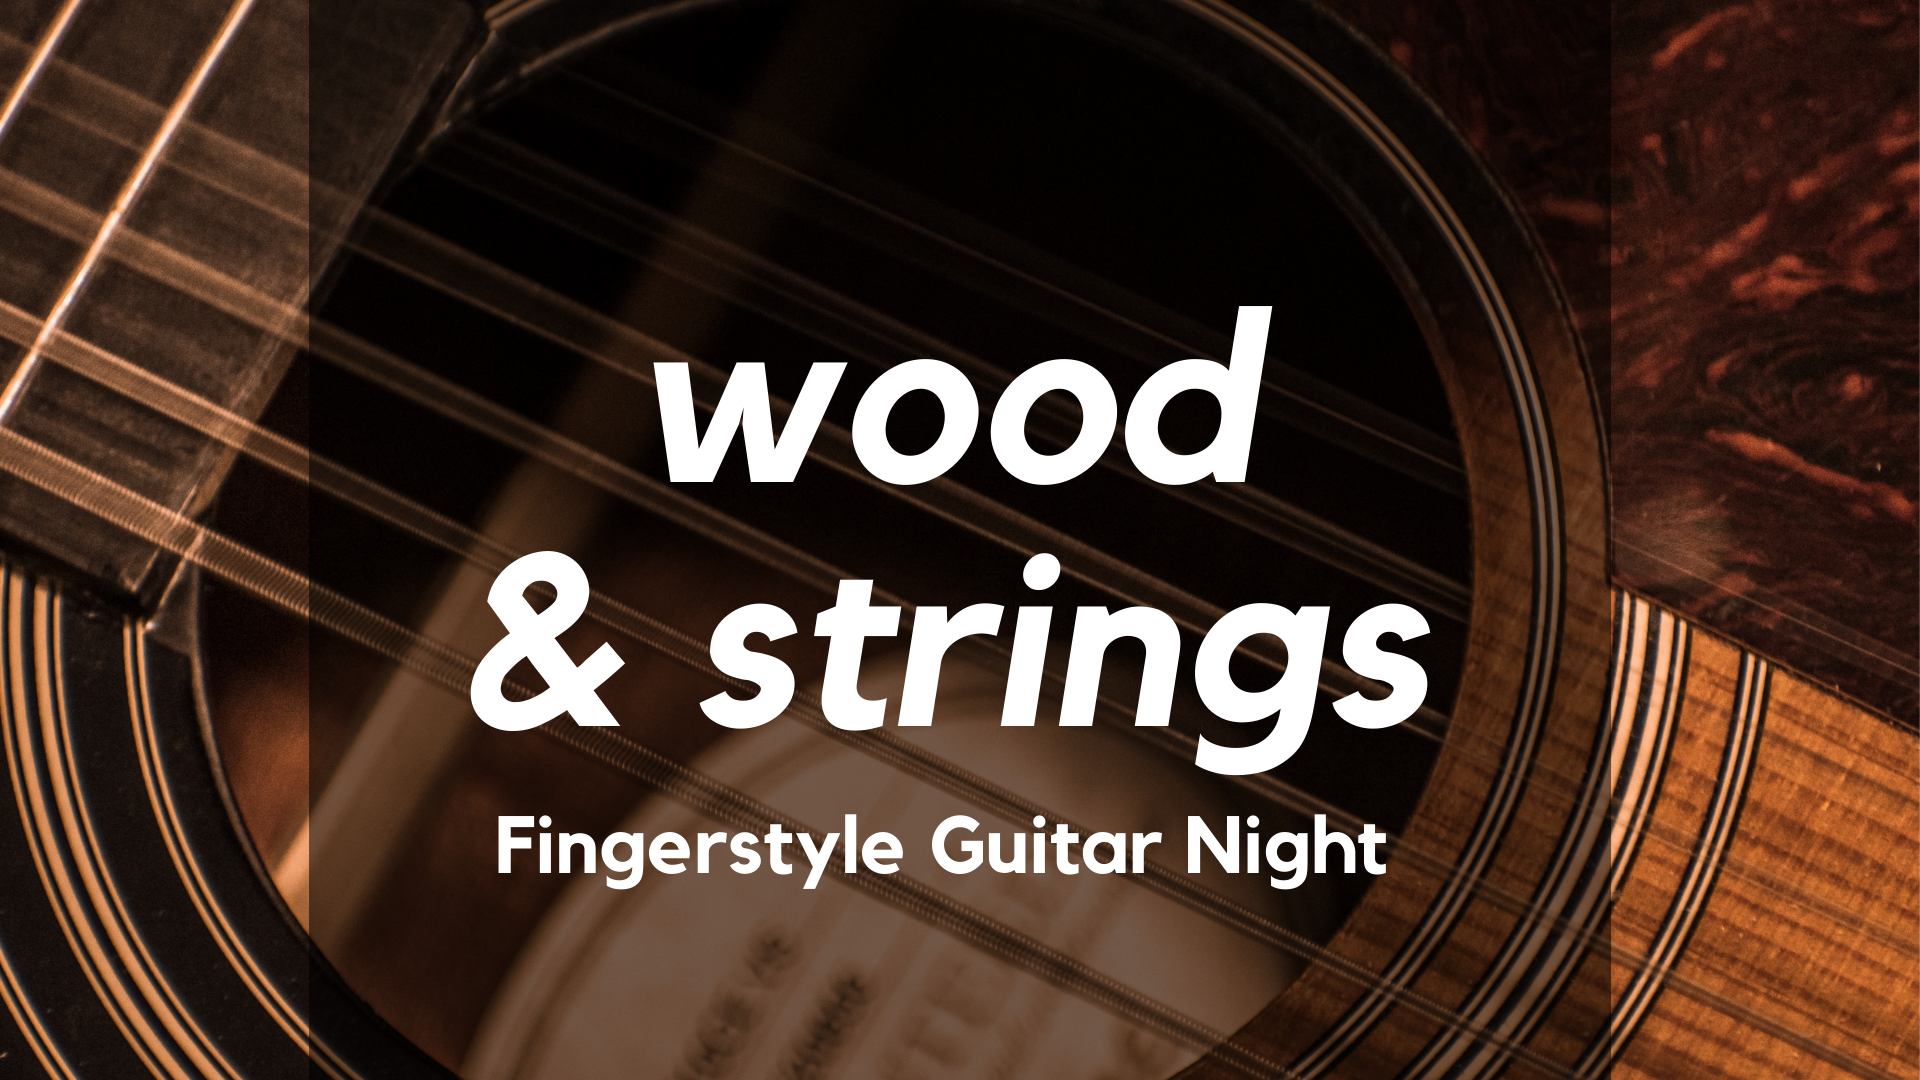 Wood & Strings - Fingerstyle Guitar Night